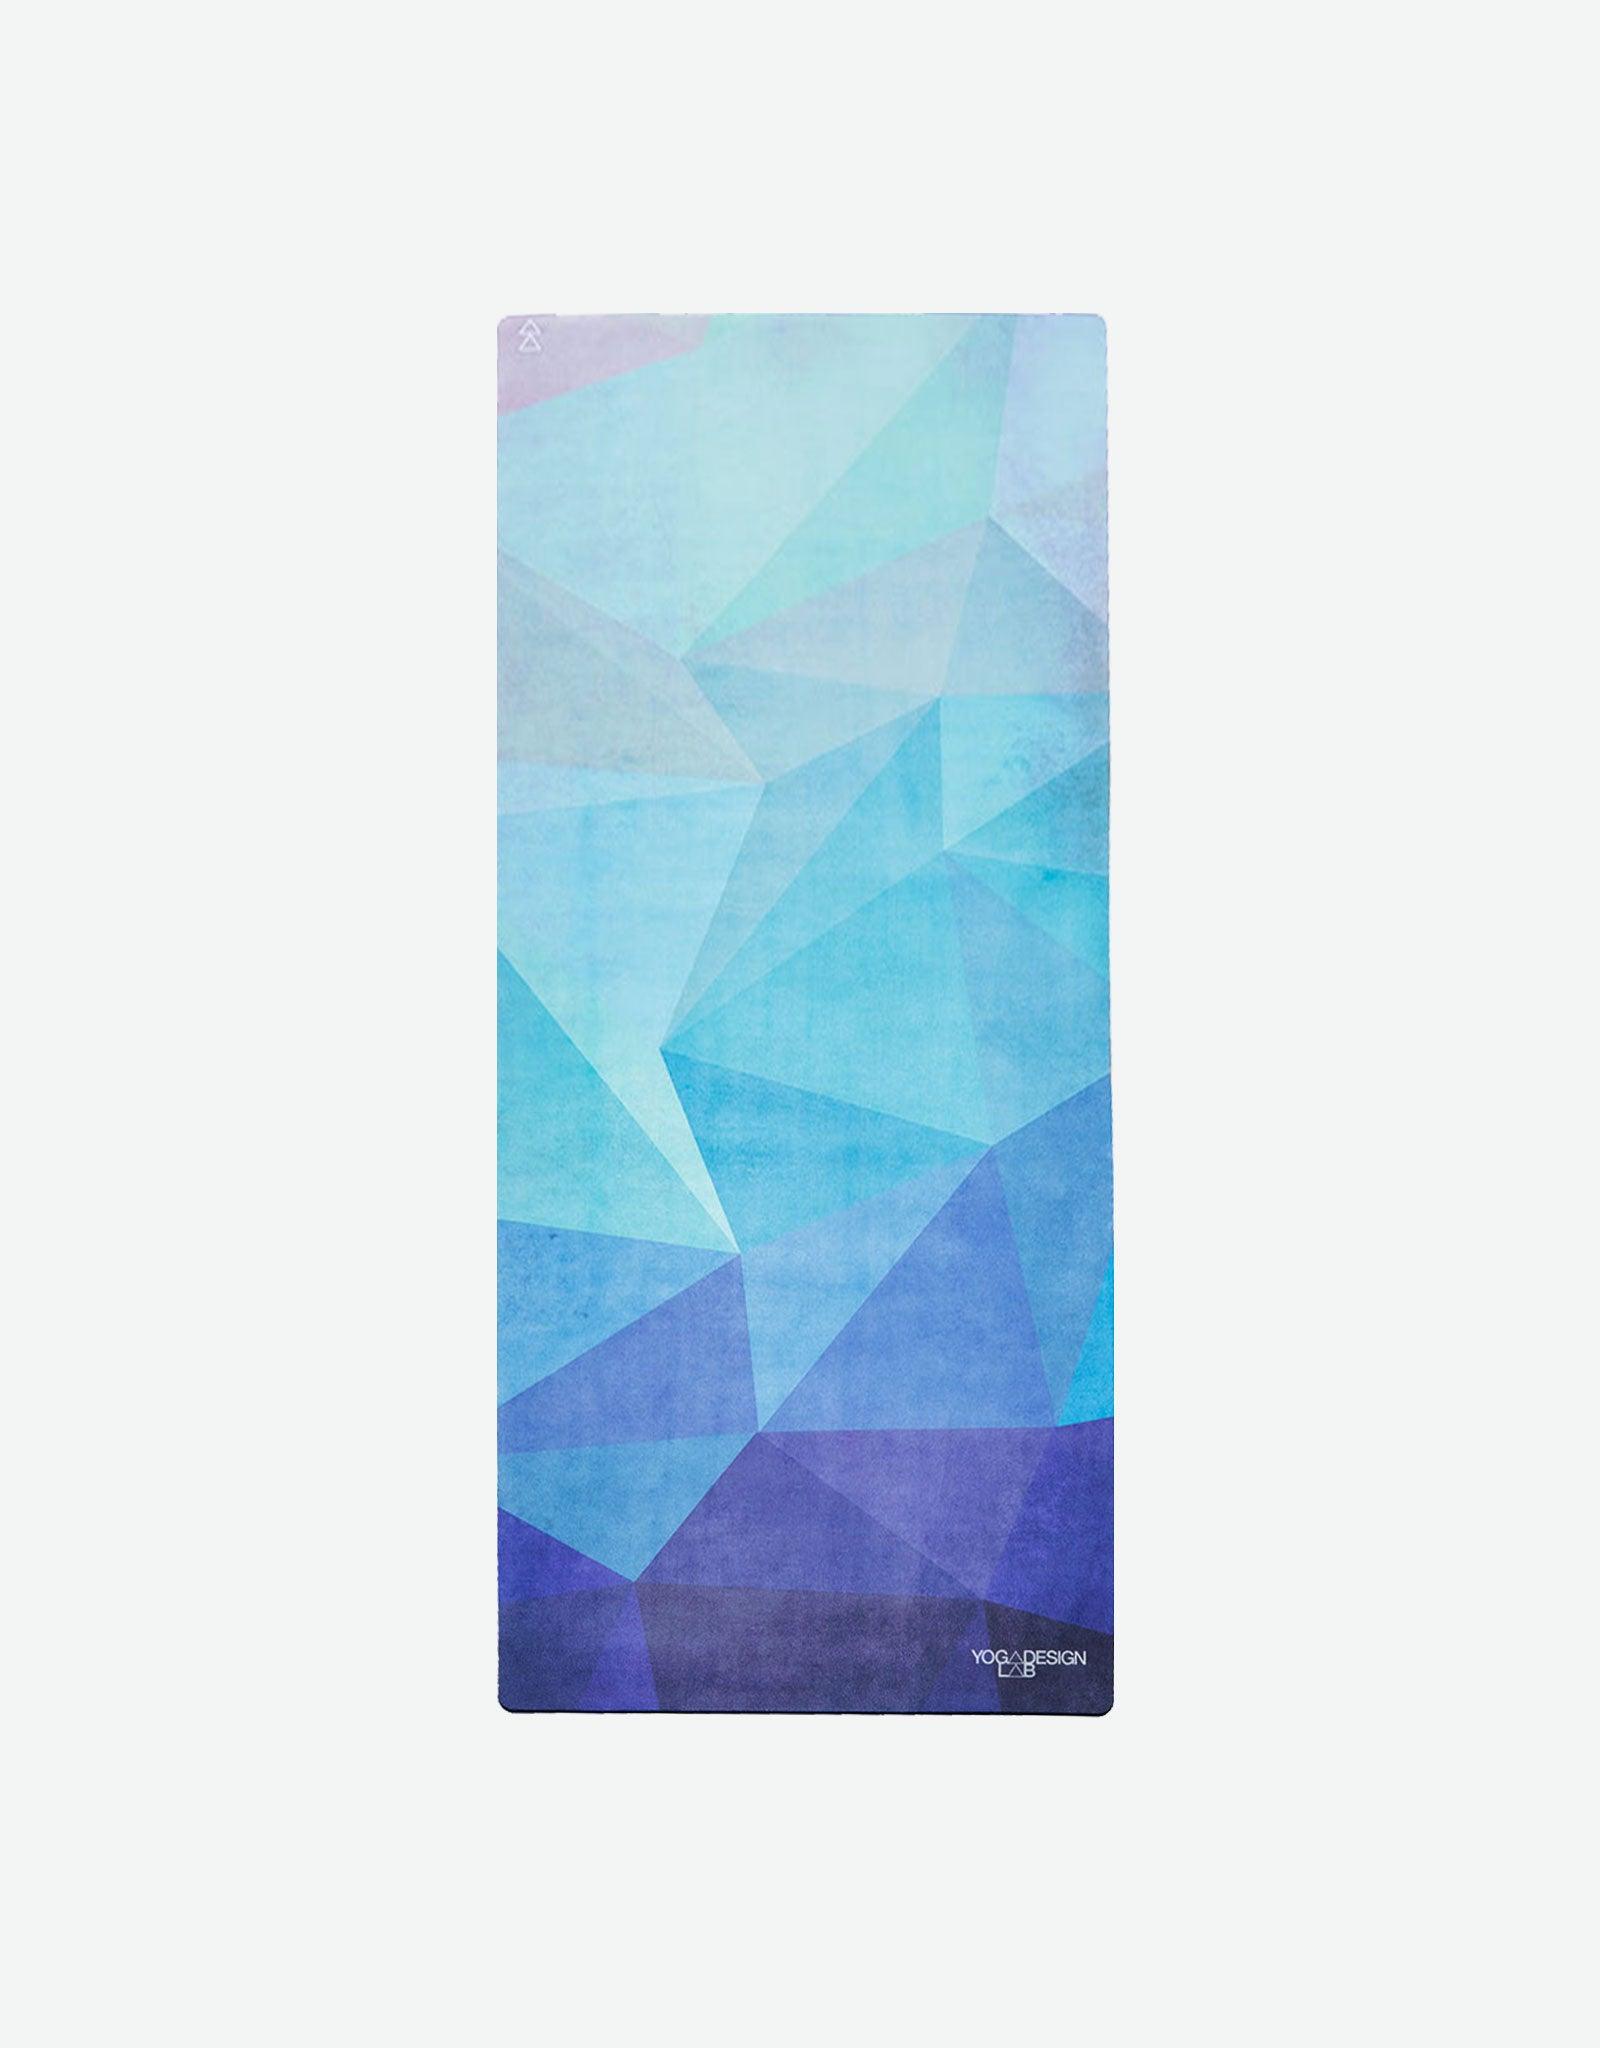 Combo Yoga Mat: 2-in-1 (Mat + Towel) - Kids Geo Blue - Lightweight, Ultra-Soft - Yoga Design Lab 